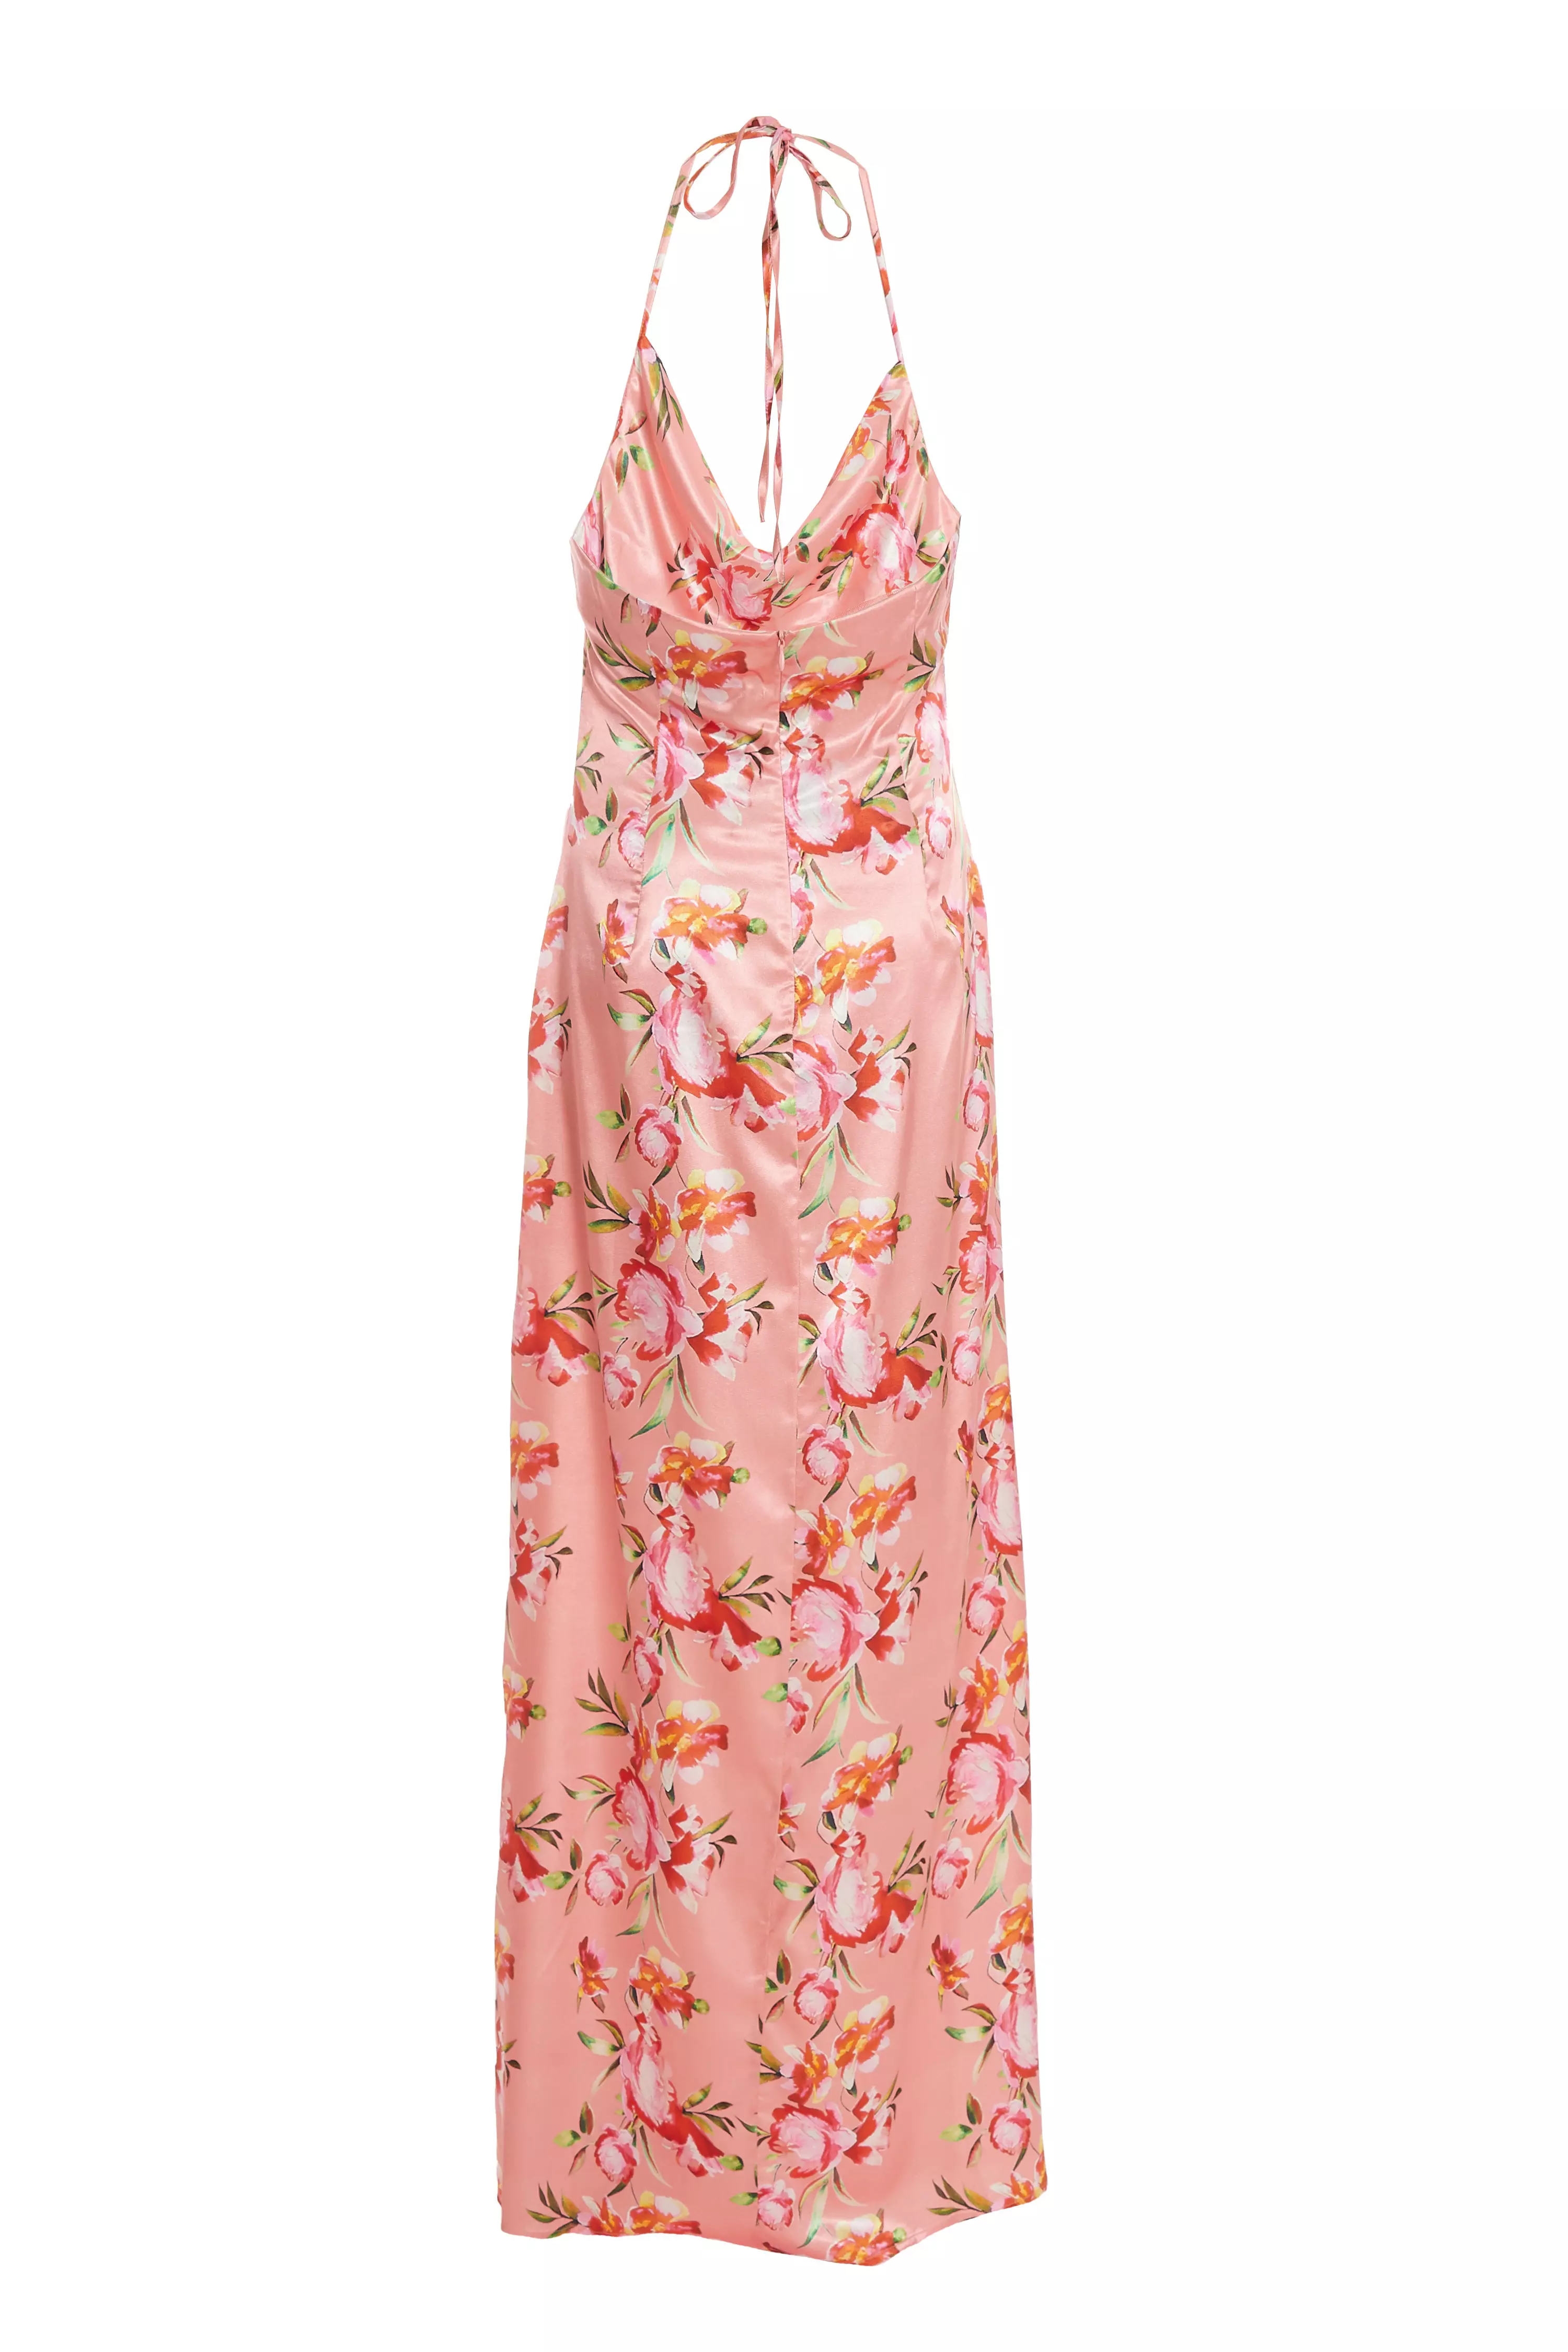 Coral Floral Satin Maxi Dress - QUIZ Clothing